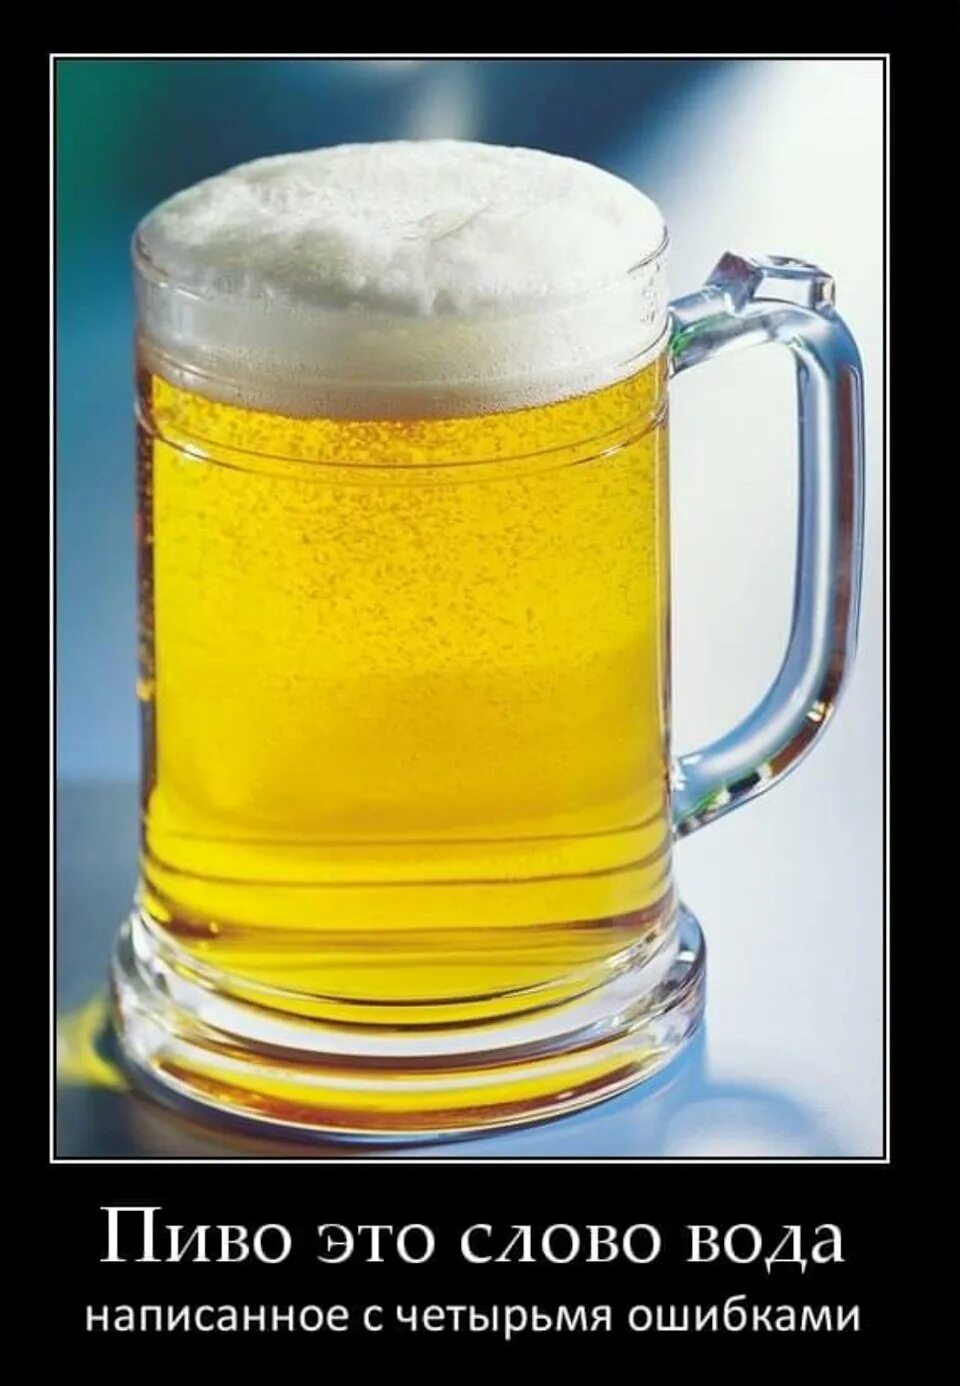 Пейте пиво прикол. Приколы про пиво. Прикольное пиво. Смешные картинки про пиво. Приколы про пиво смешные.